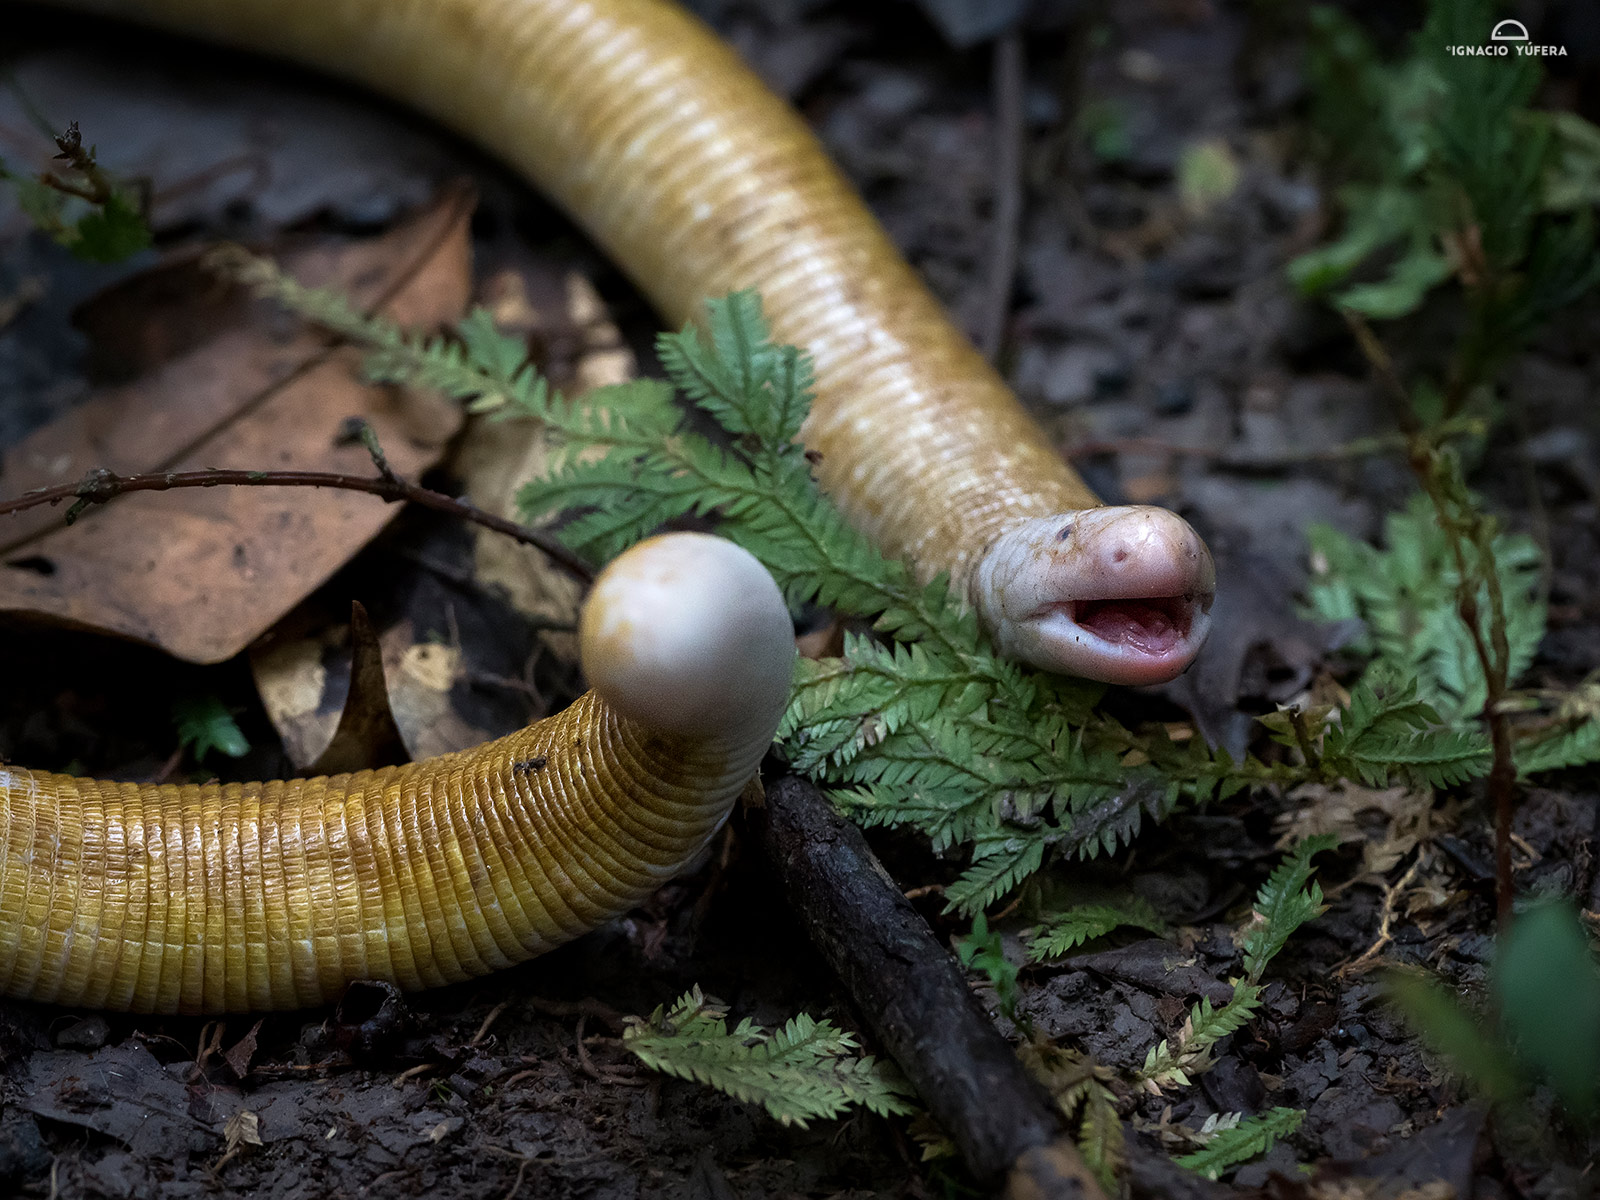 Giant worm-lizard (Amphisbaena alba) in defensive attitude, Amazonas, Brazil